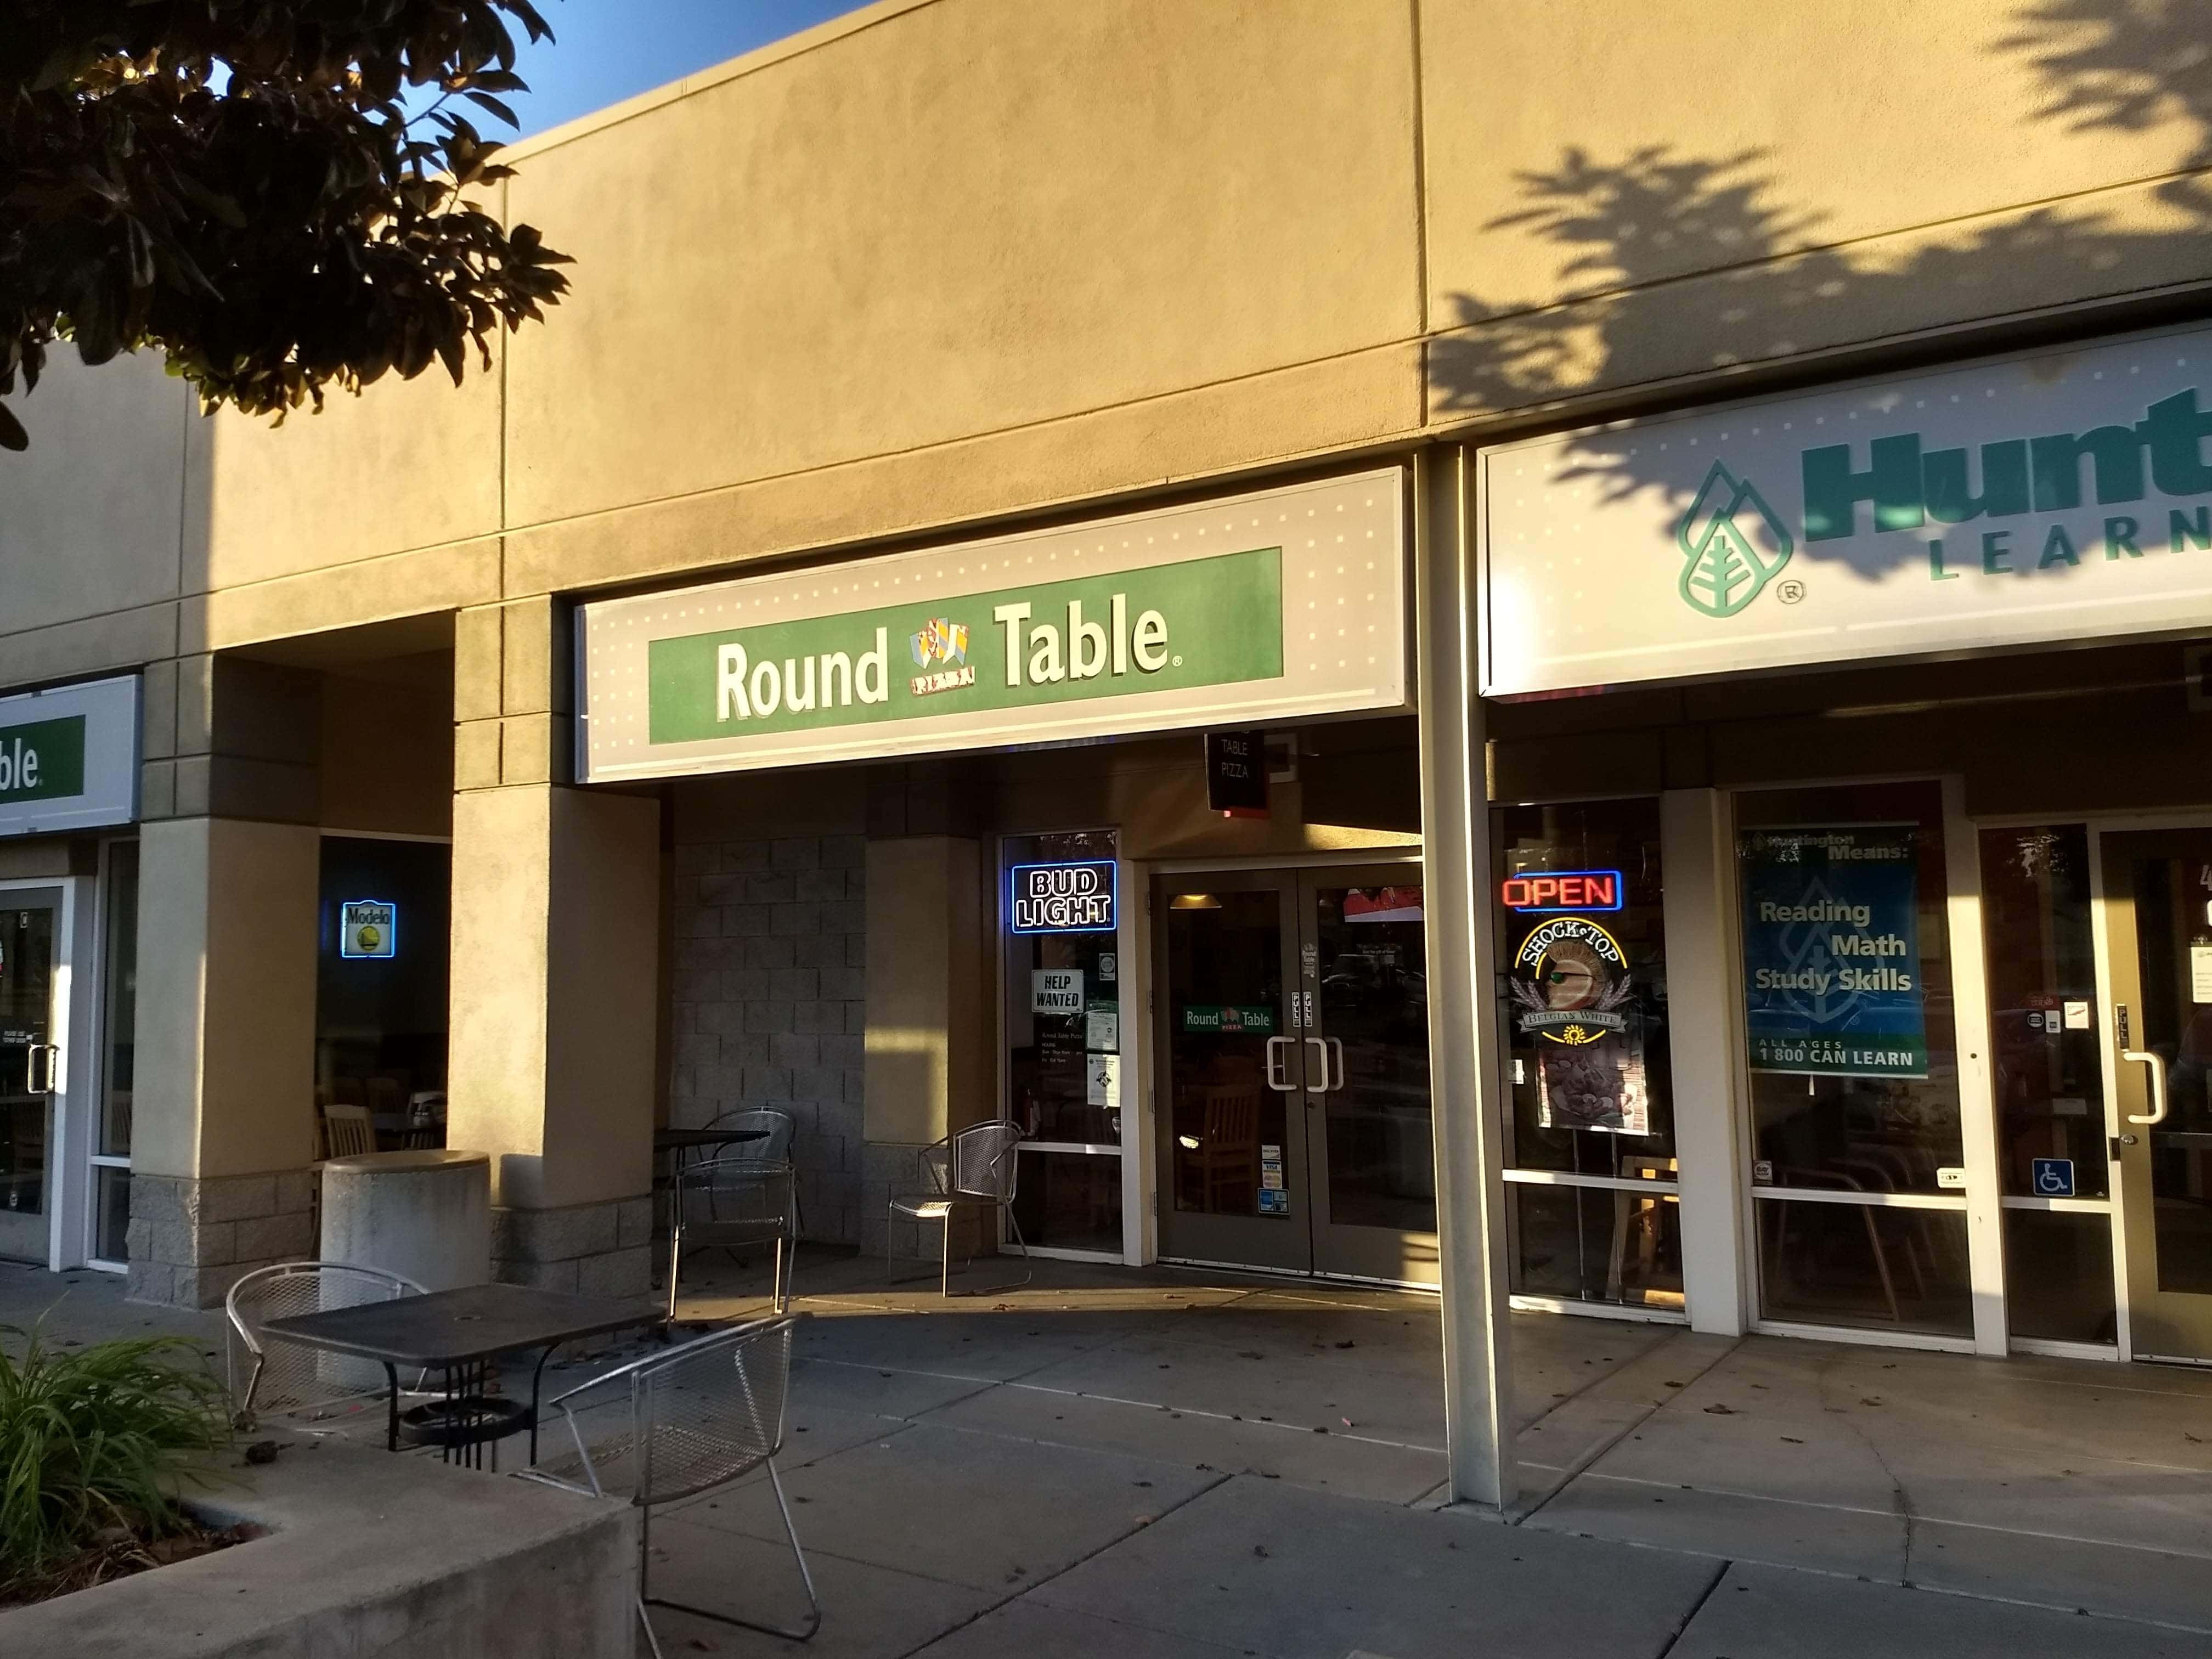 Round Table Pizza - Pleasanton (CA 94588), US, fast food restaurant